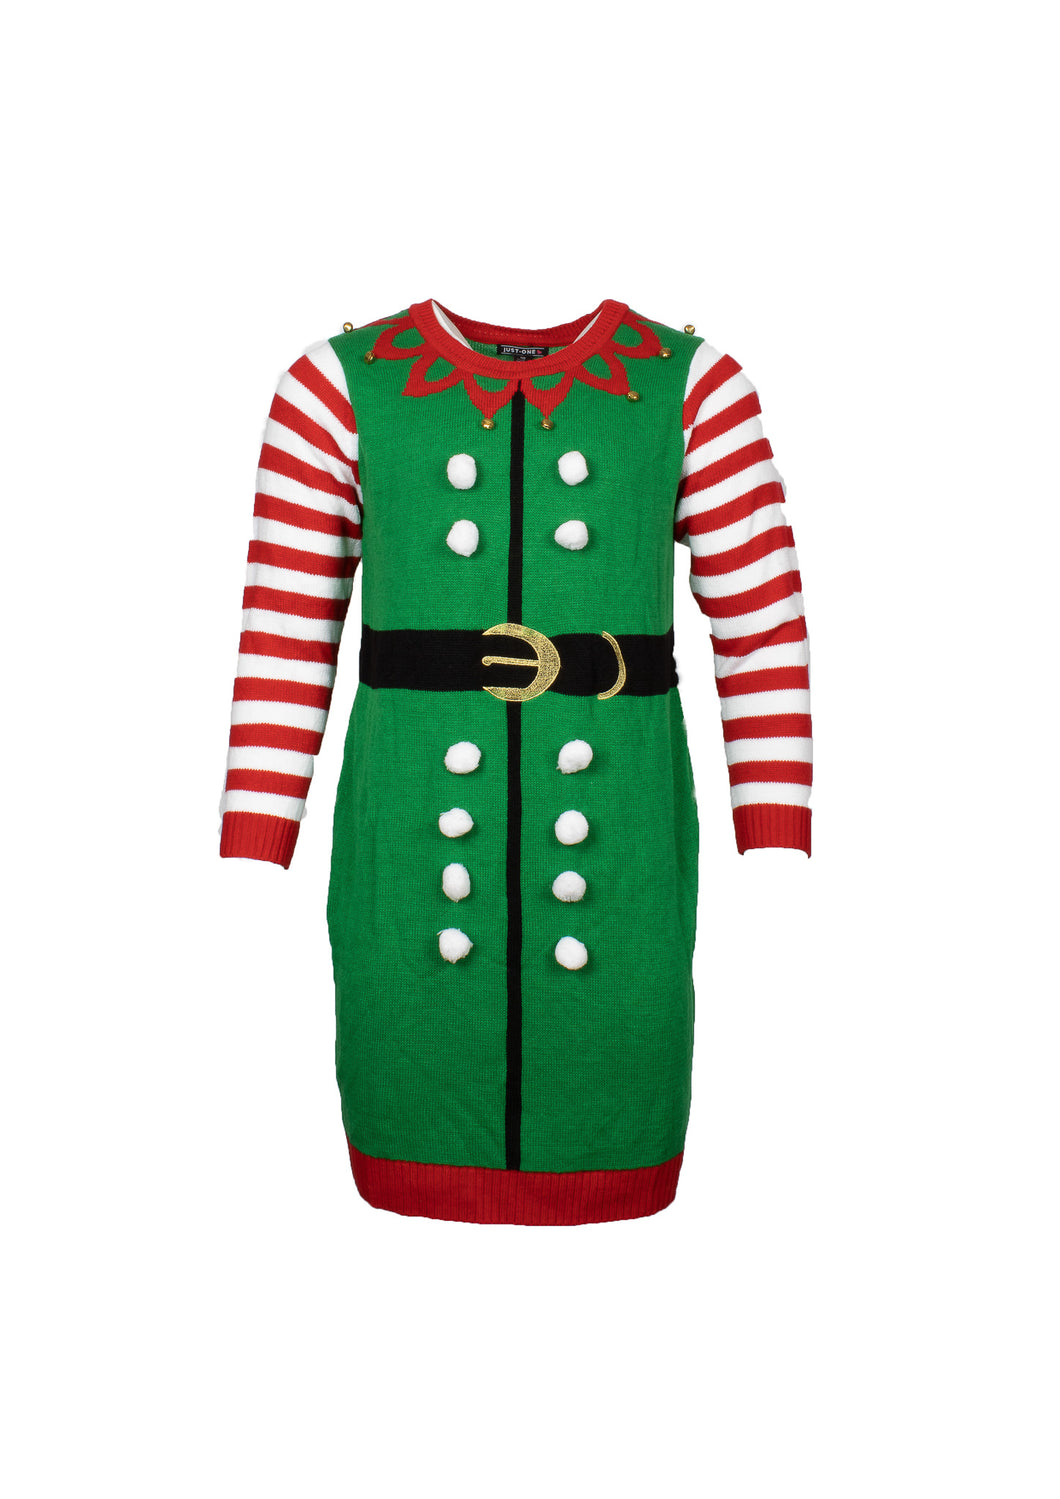 Christmas Elf-suit long sleeve knit dress